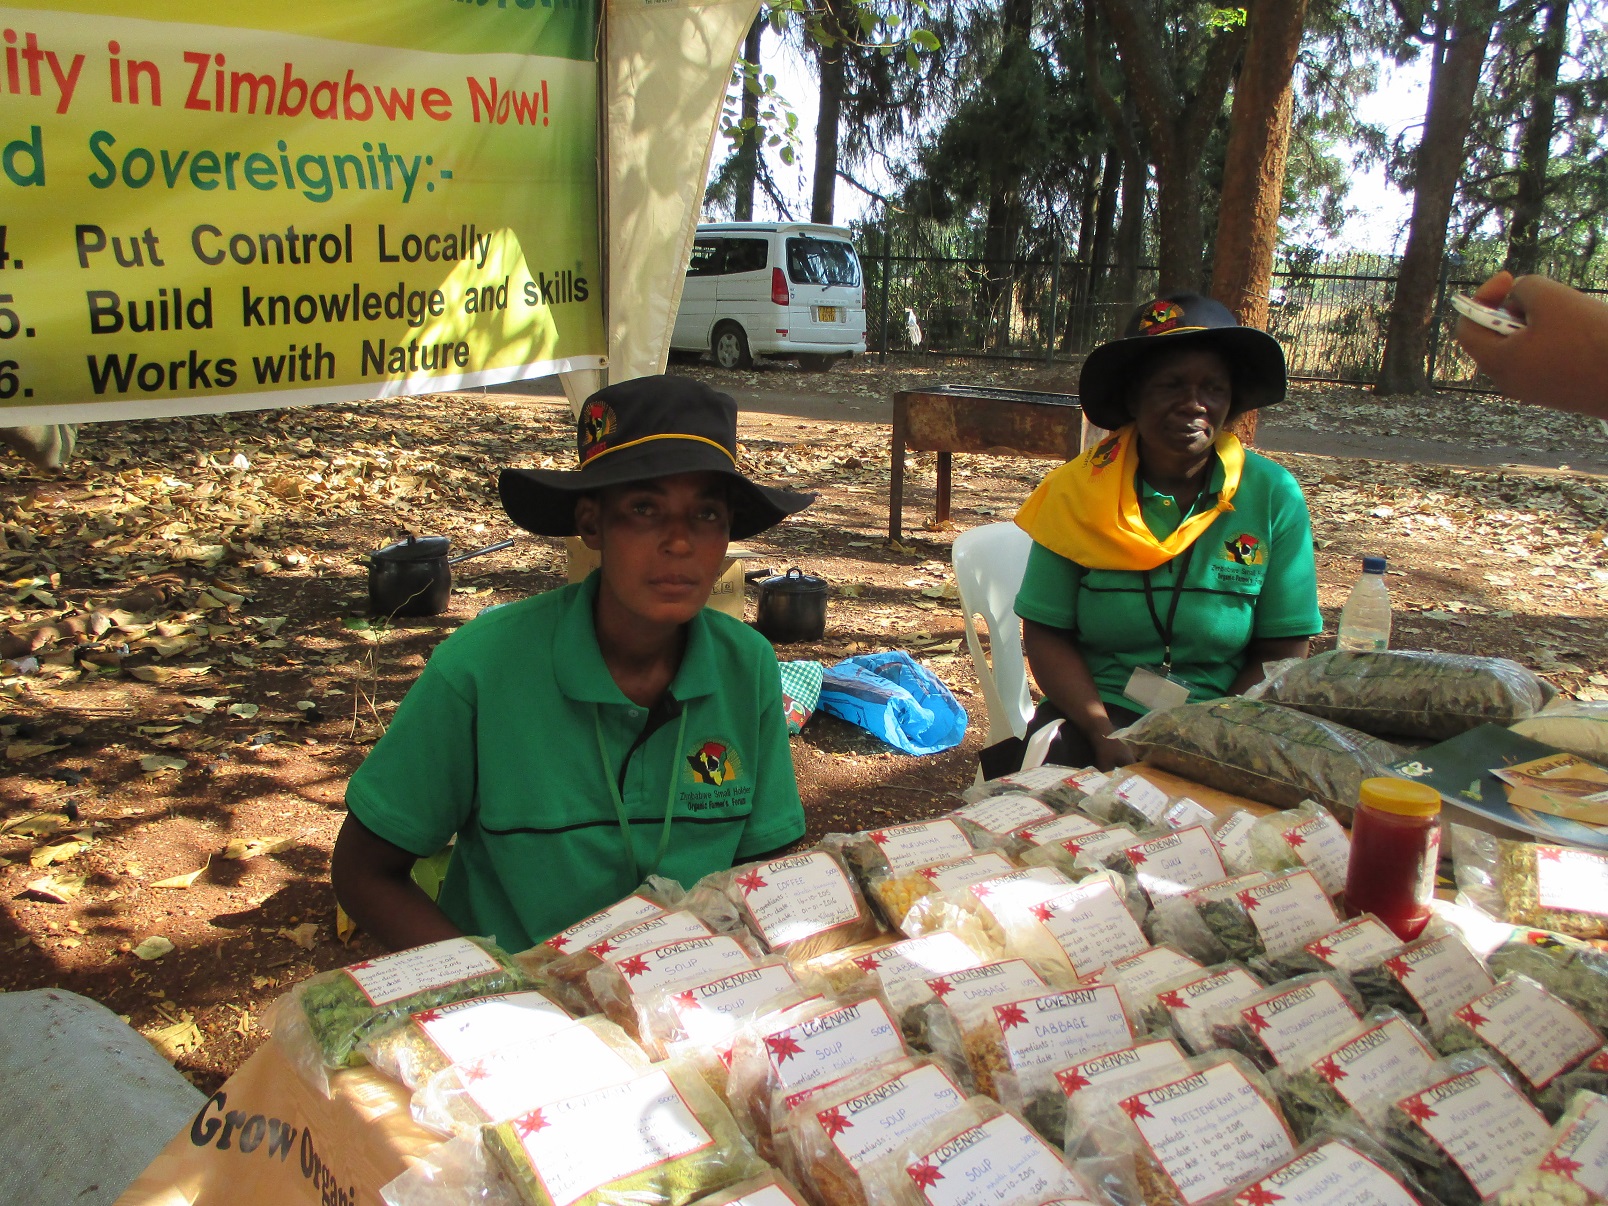 Members of the Zimbabwe Smallholder Organic Farmers Forum (ZIMSOFF), an IDEX partner